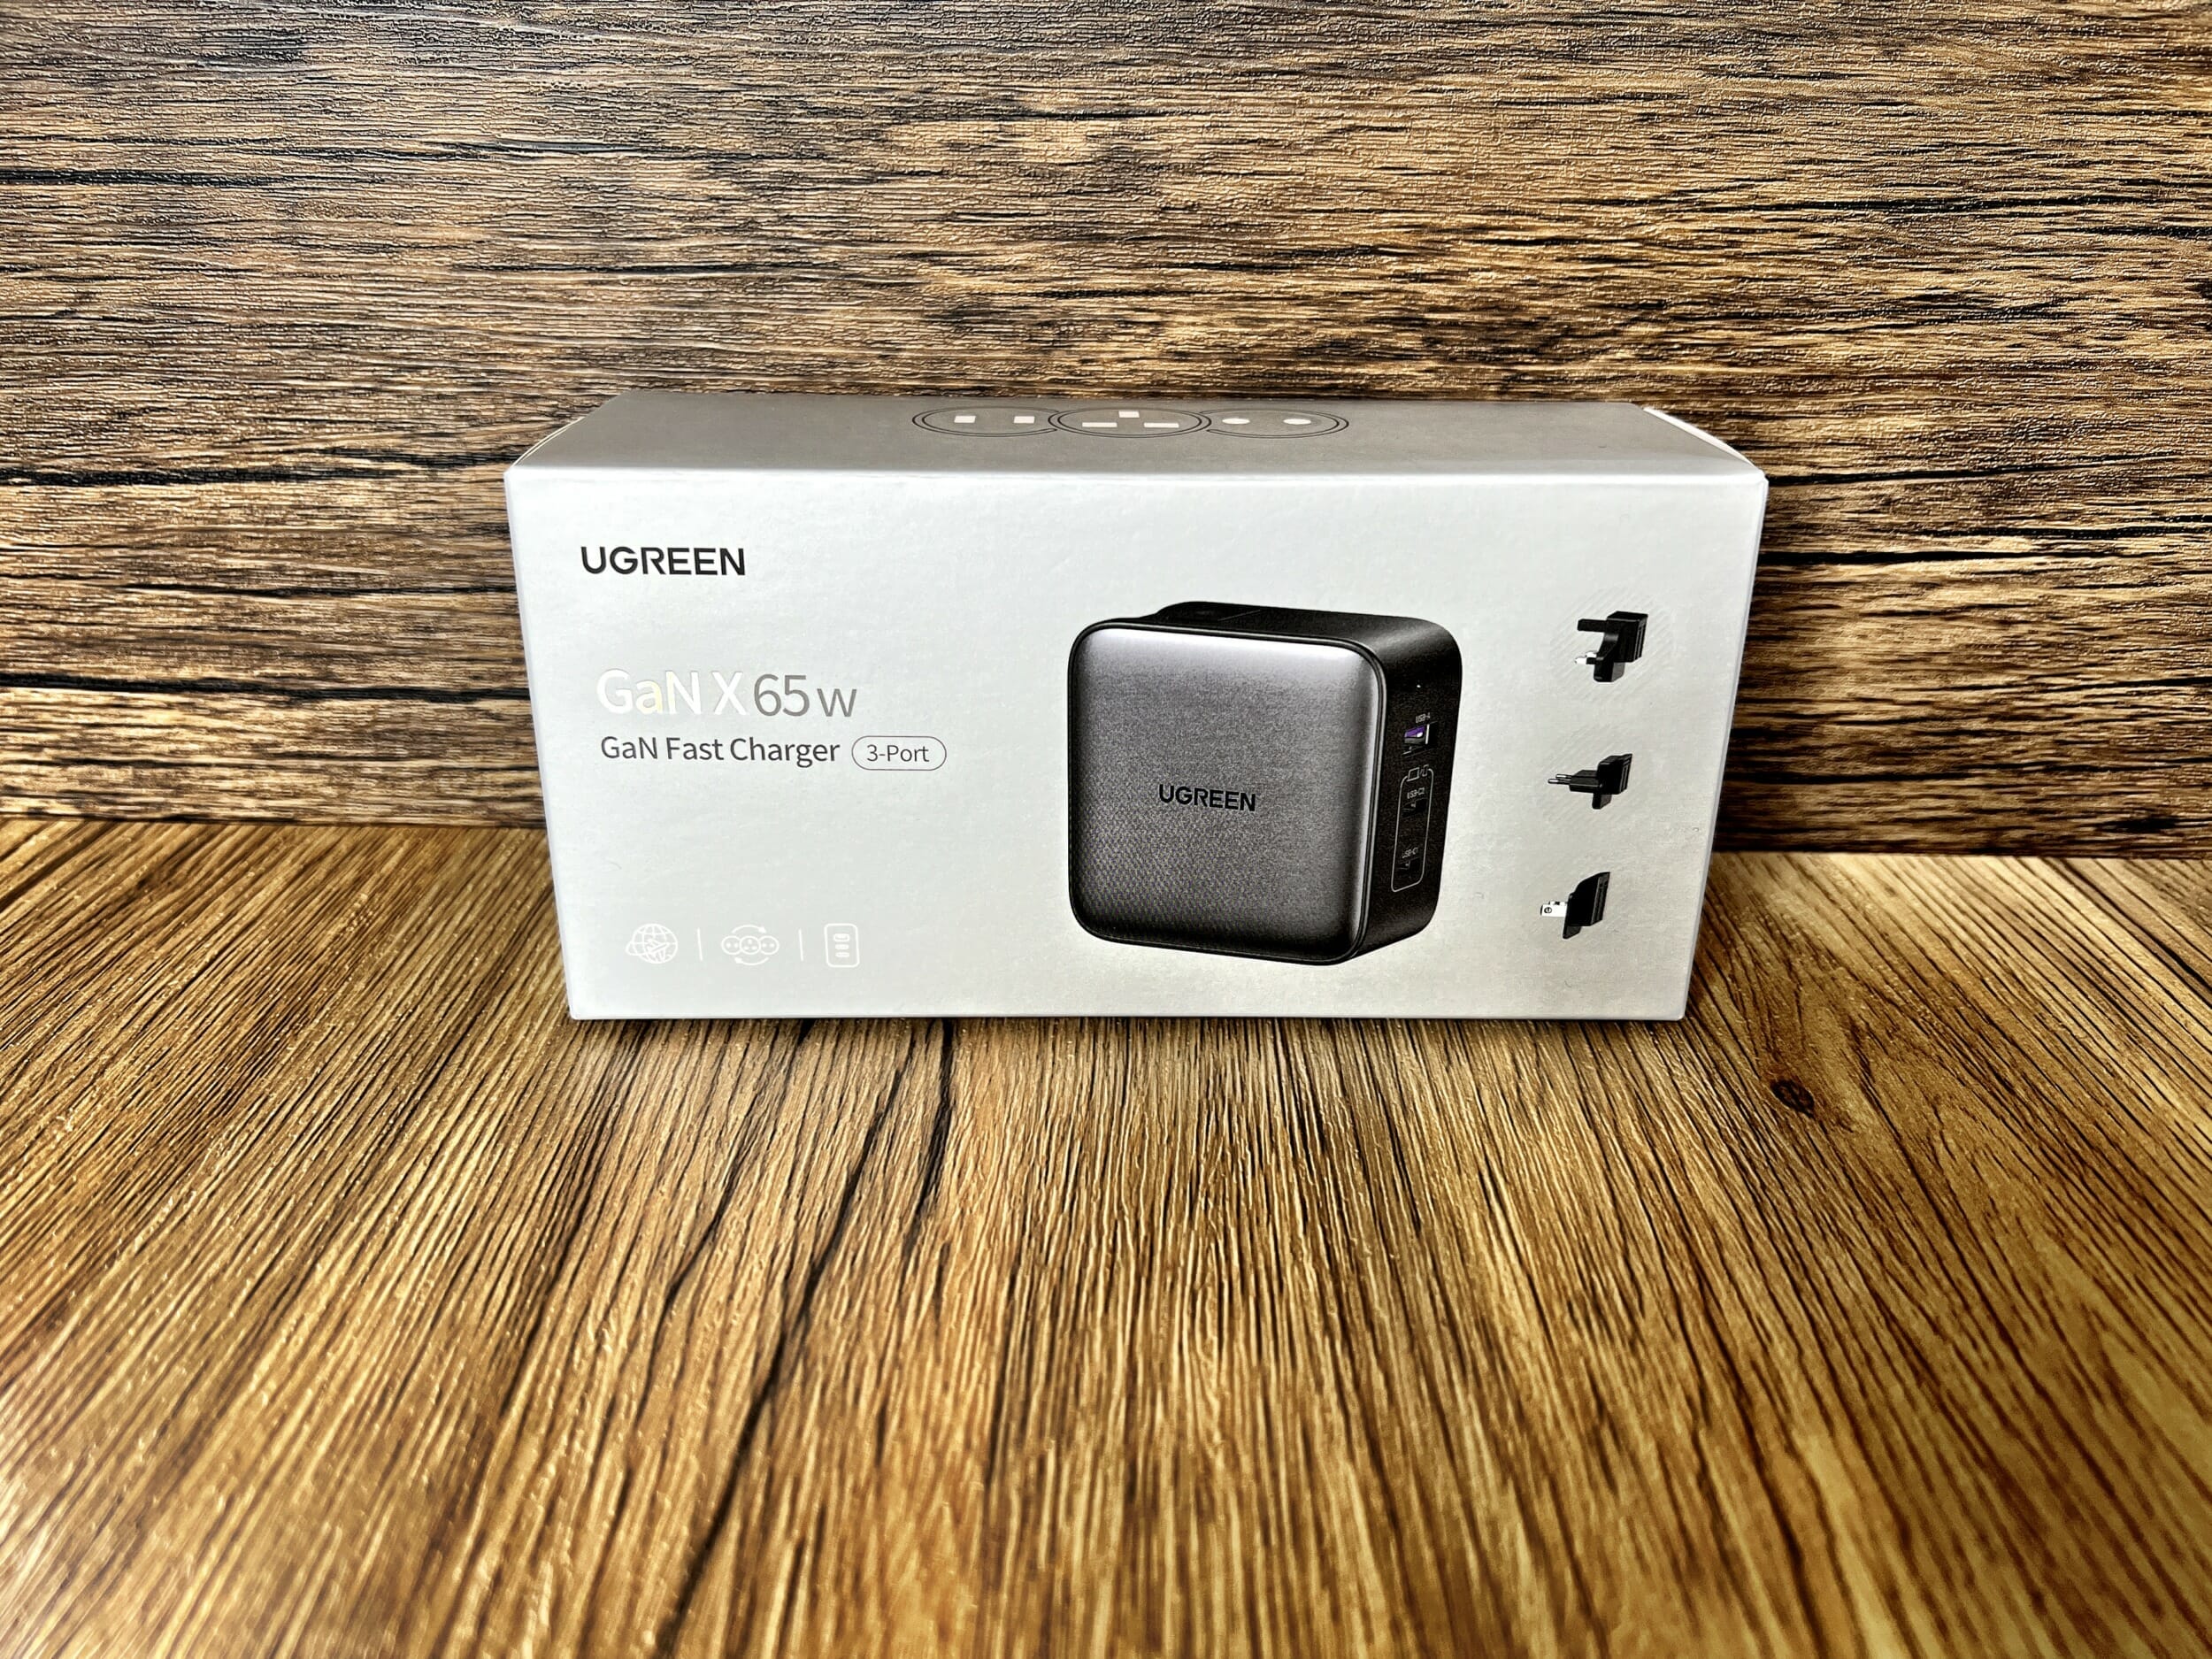 UGREEN Nexode 65W USB C Charger Review - Irish Tech News